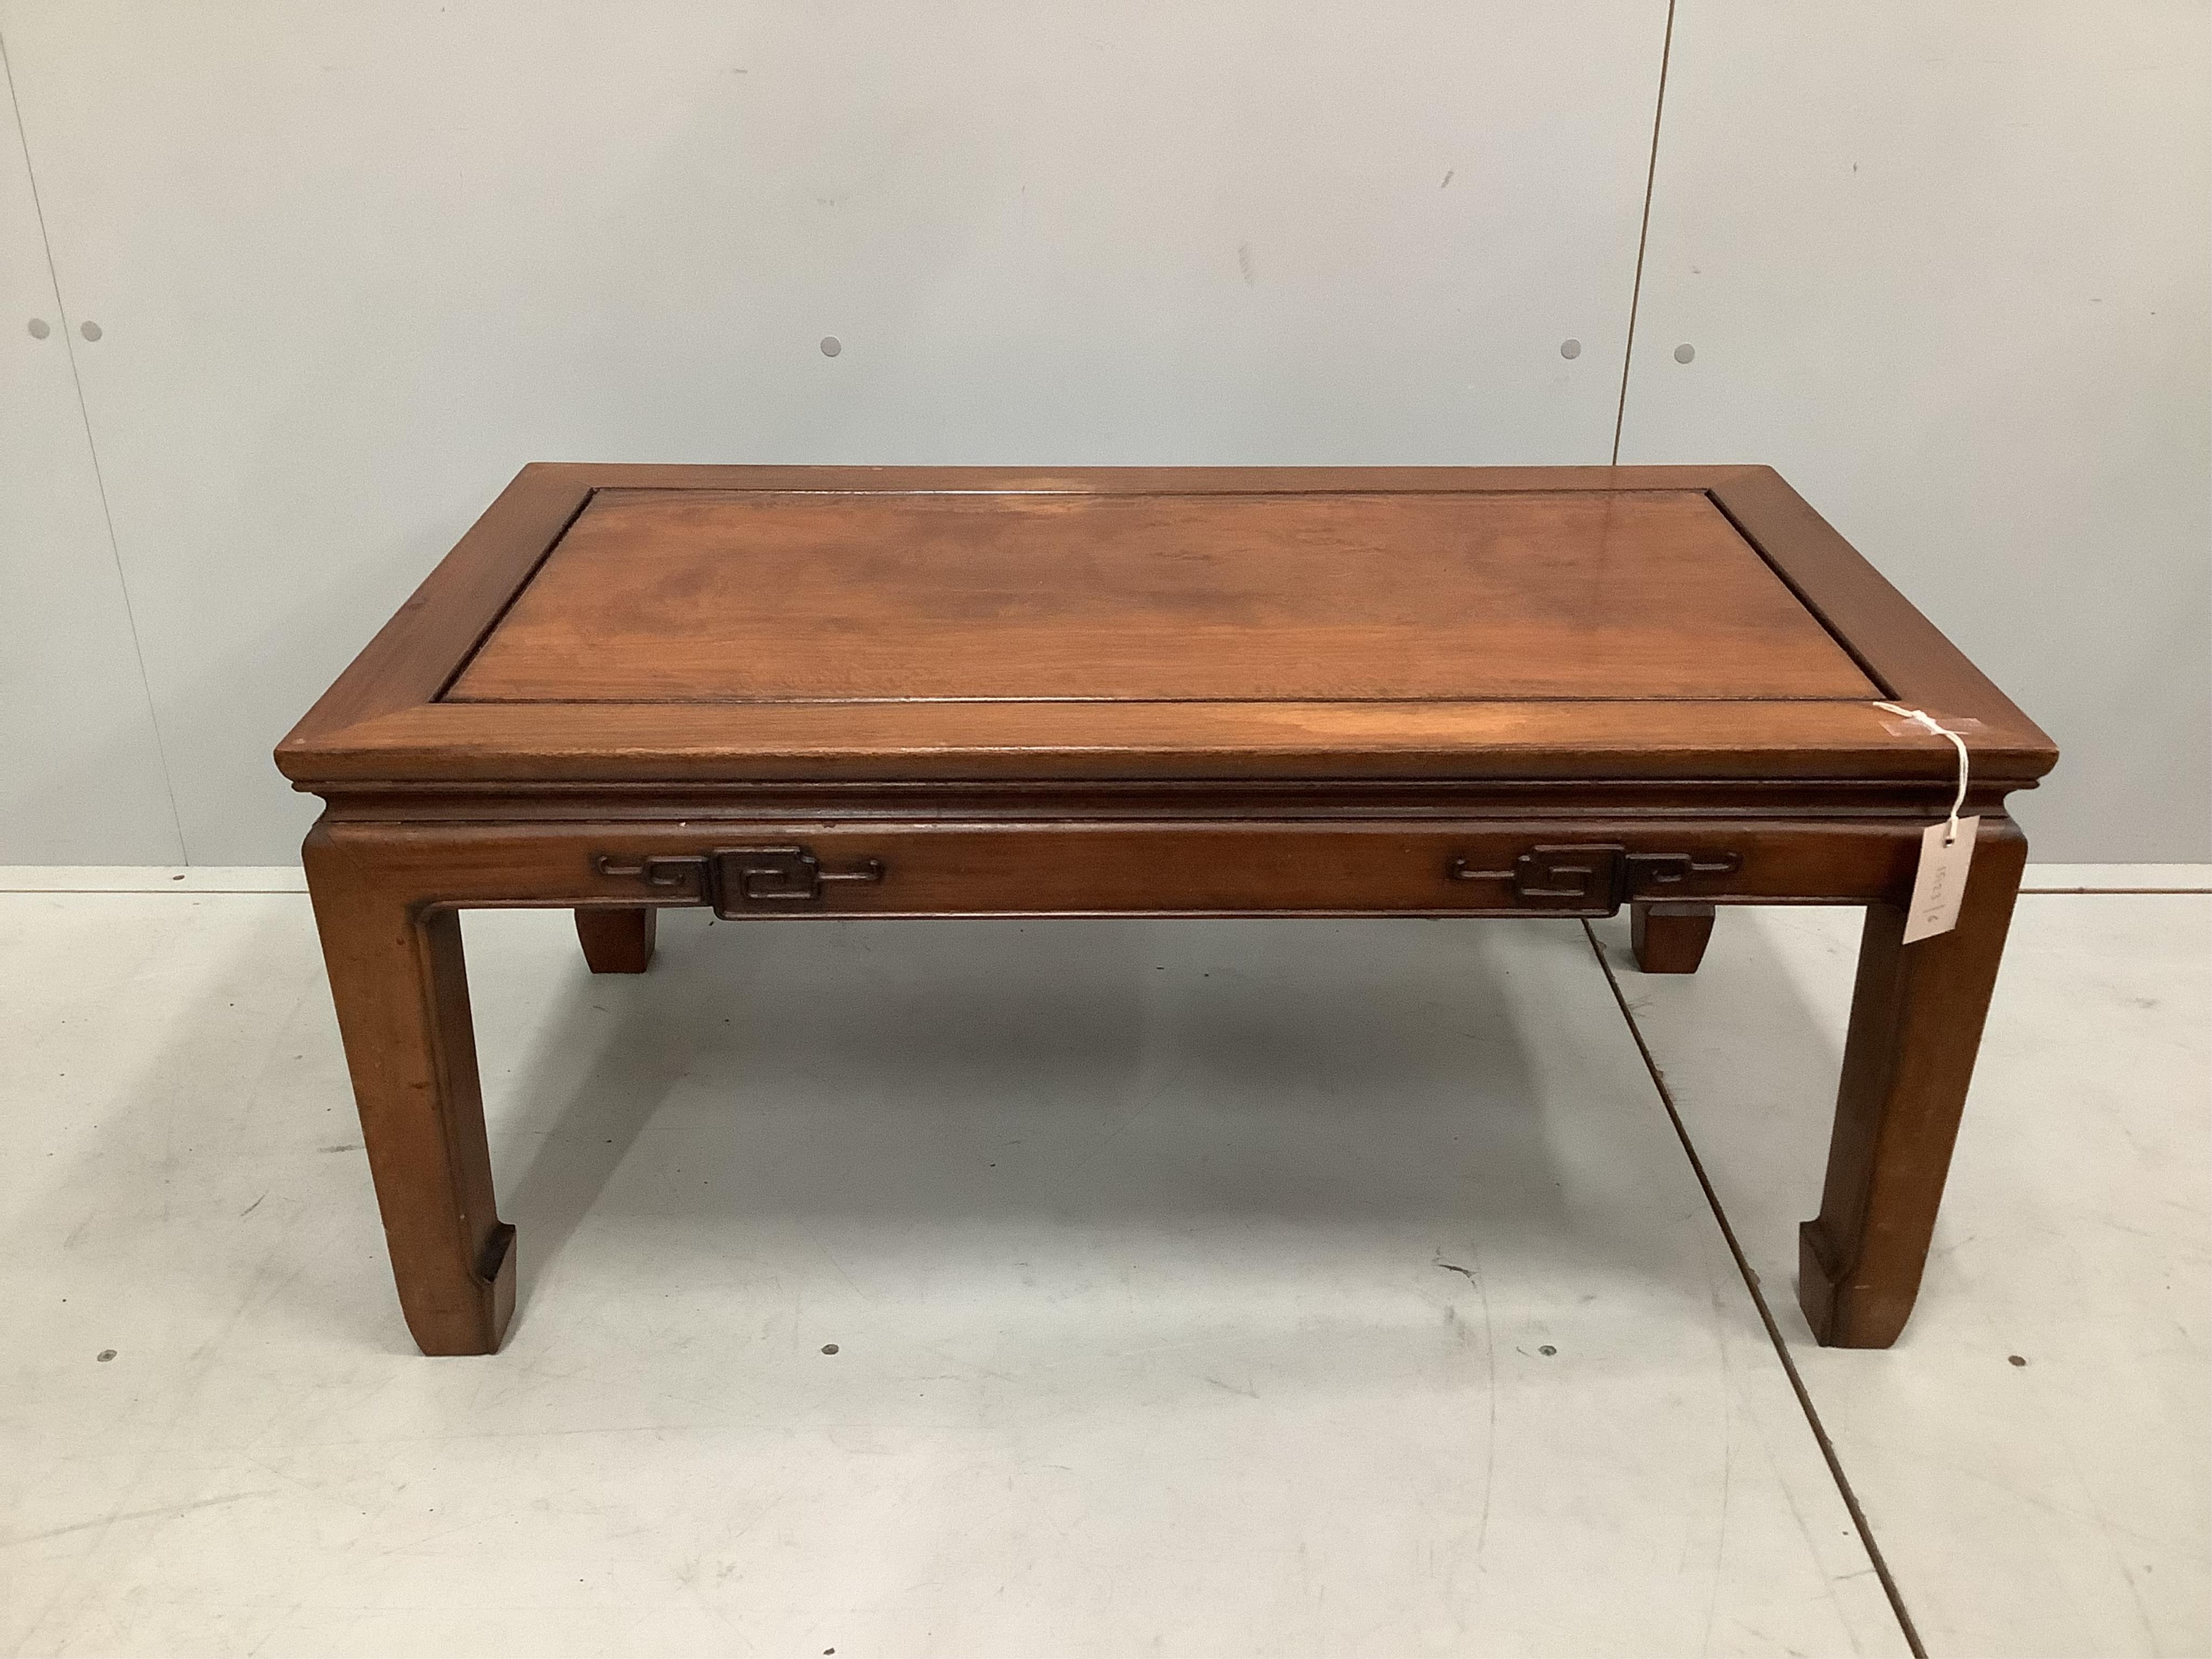 A Chinese rectangular hardwood coffee table, width 91cm, depth 50cm, height 41cm. Condition - fair